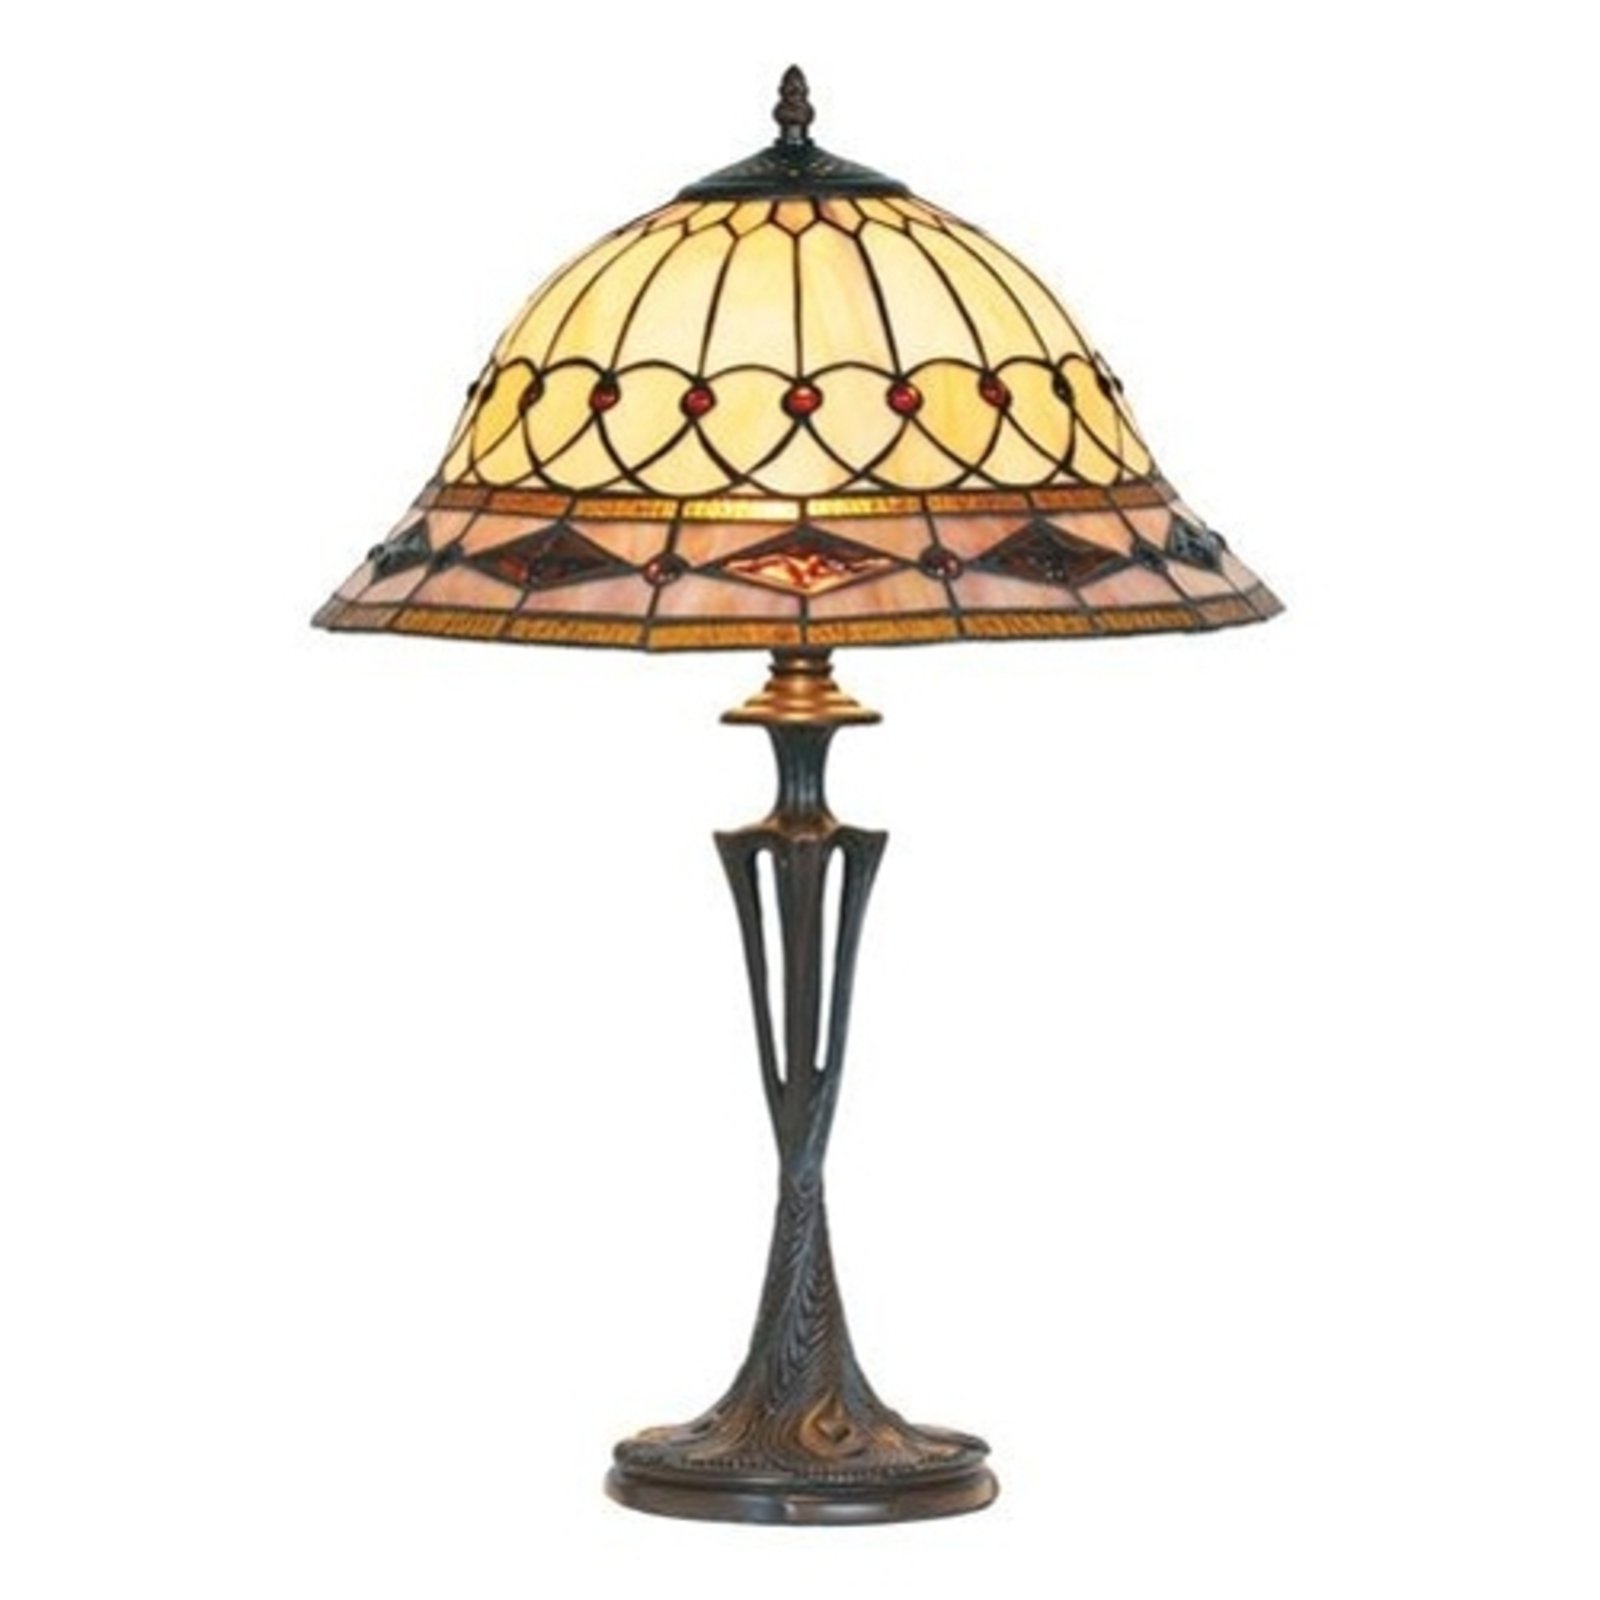 Cassandra stolna lampa u Tiffany stilu, visina 59 cm